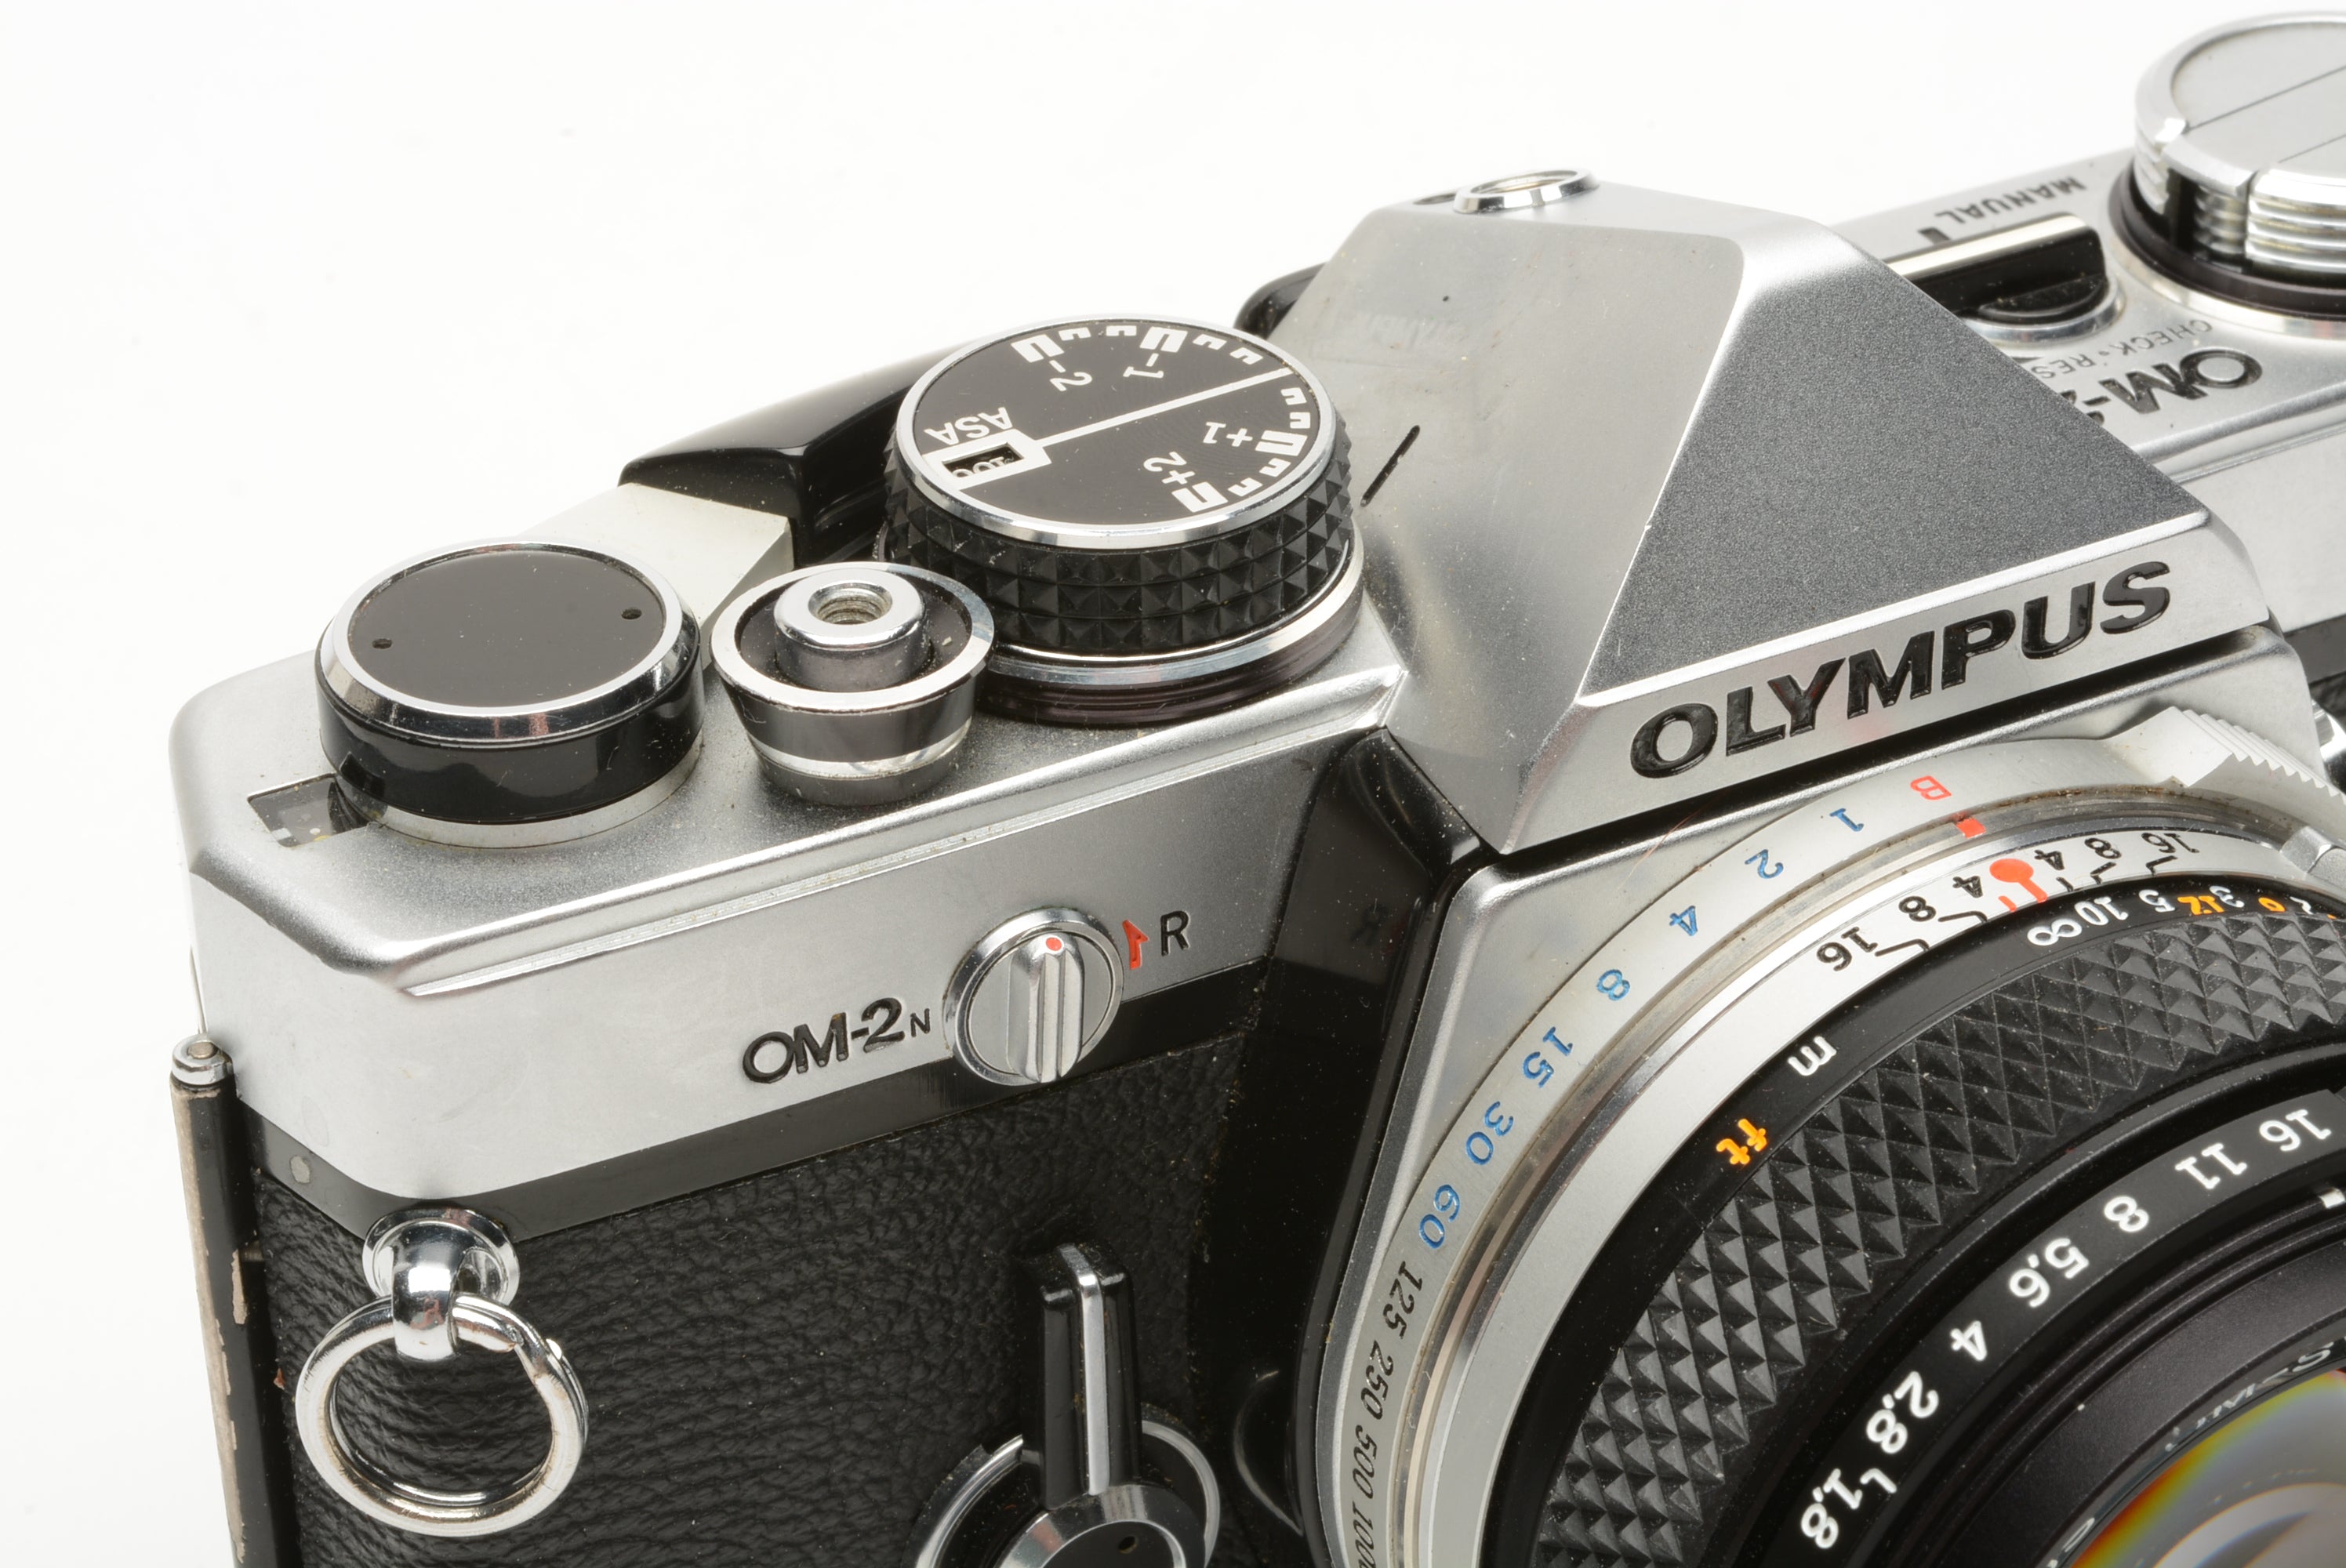 Olympus OM-2N 35mm SLR w/50mm f/1.8 Lens, Strap, Skylight Filter 